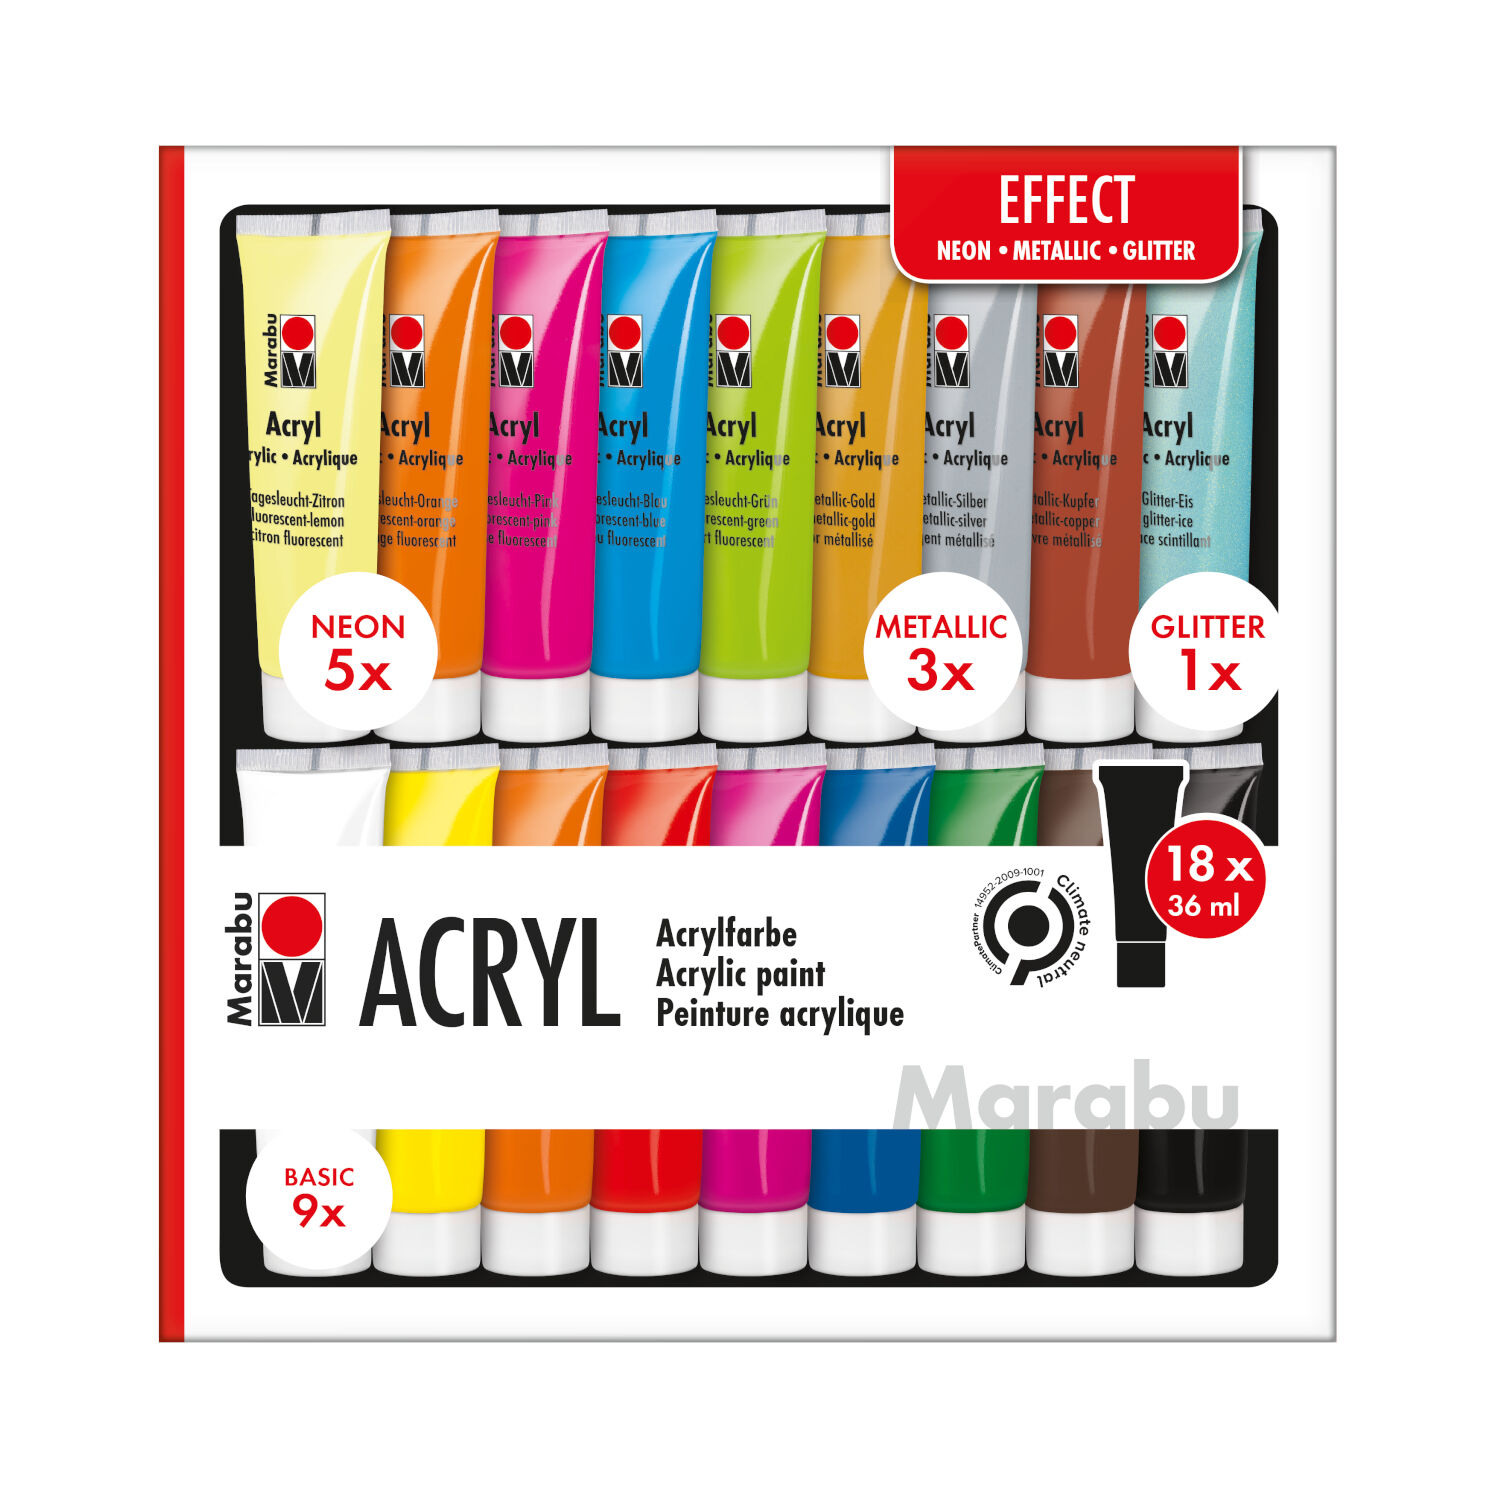 NEU Marabu Acrylfarben-Set EFFECT, 18 x 36 ml